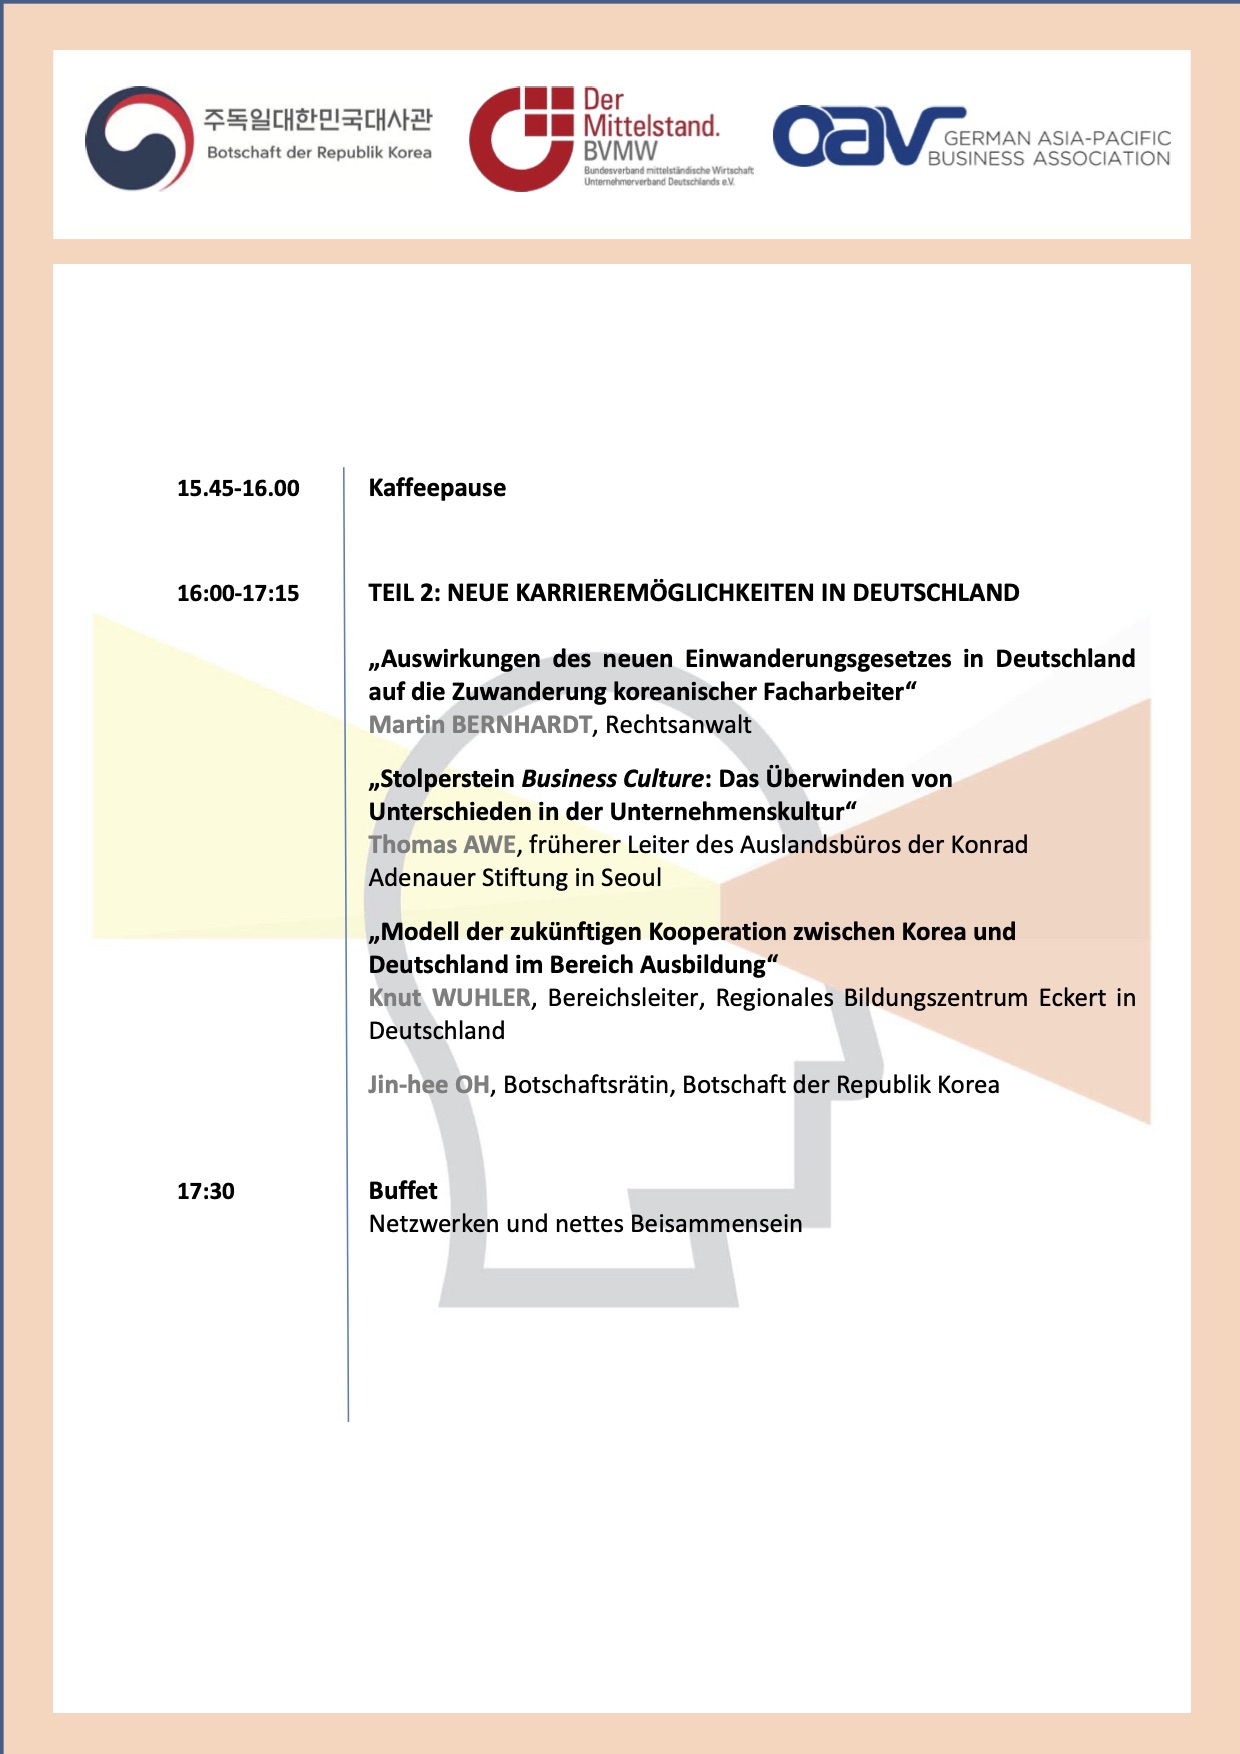 Seminar_Agenda_18.11.2019_Korea_meets_Germany2.jpg